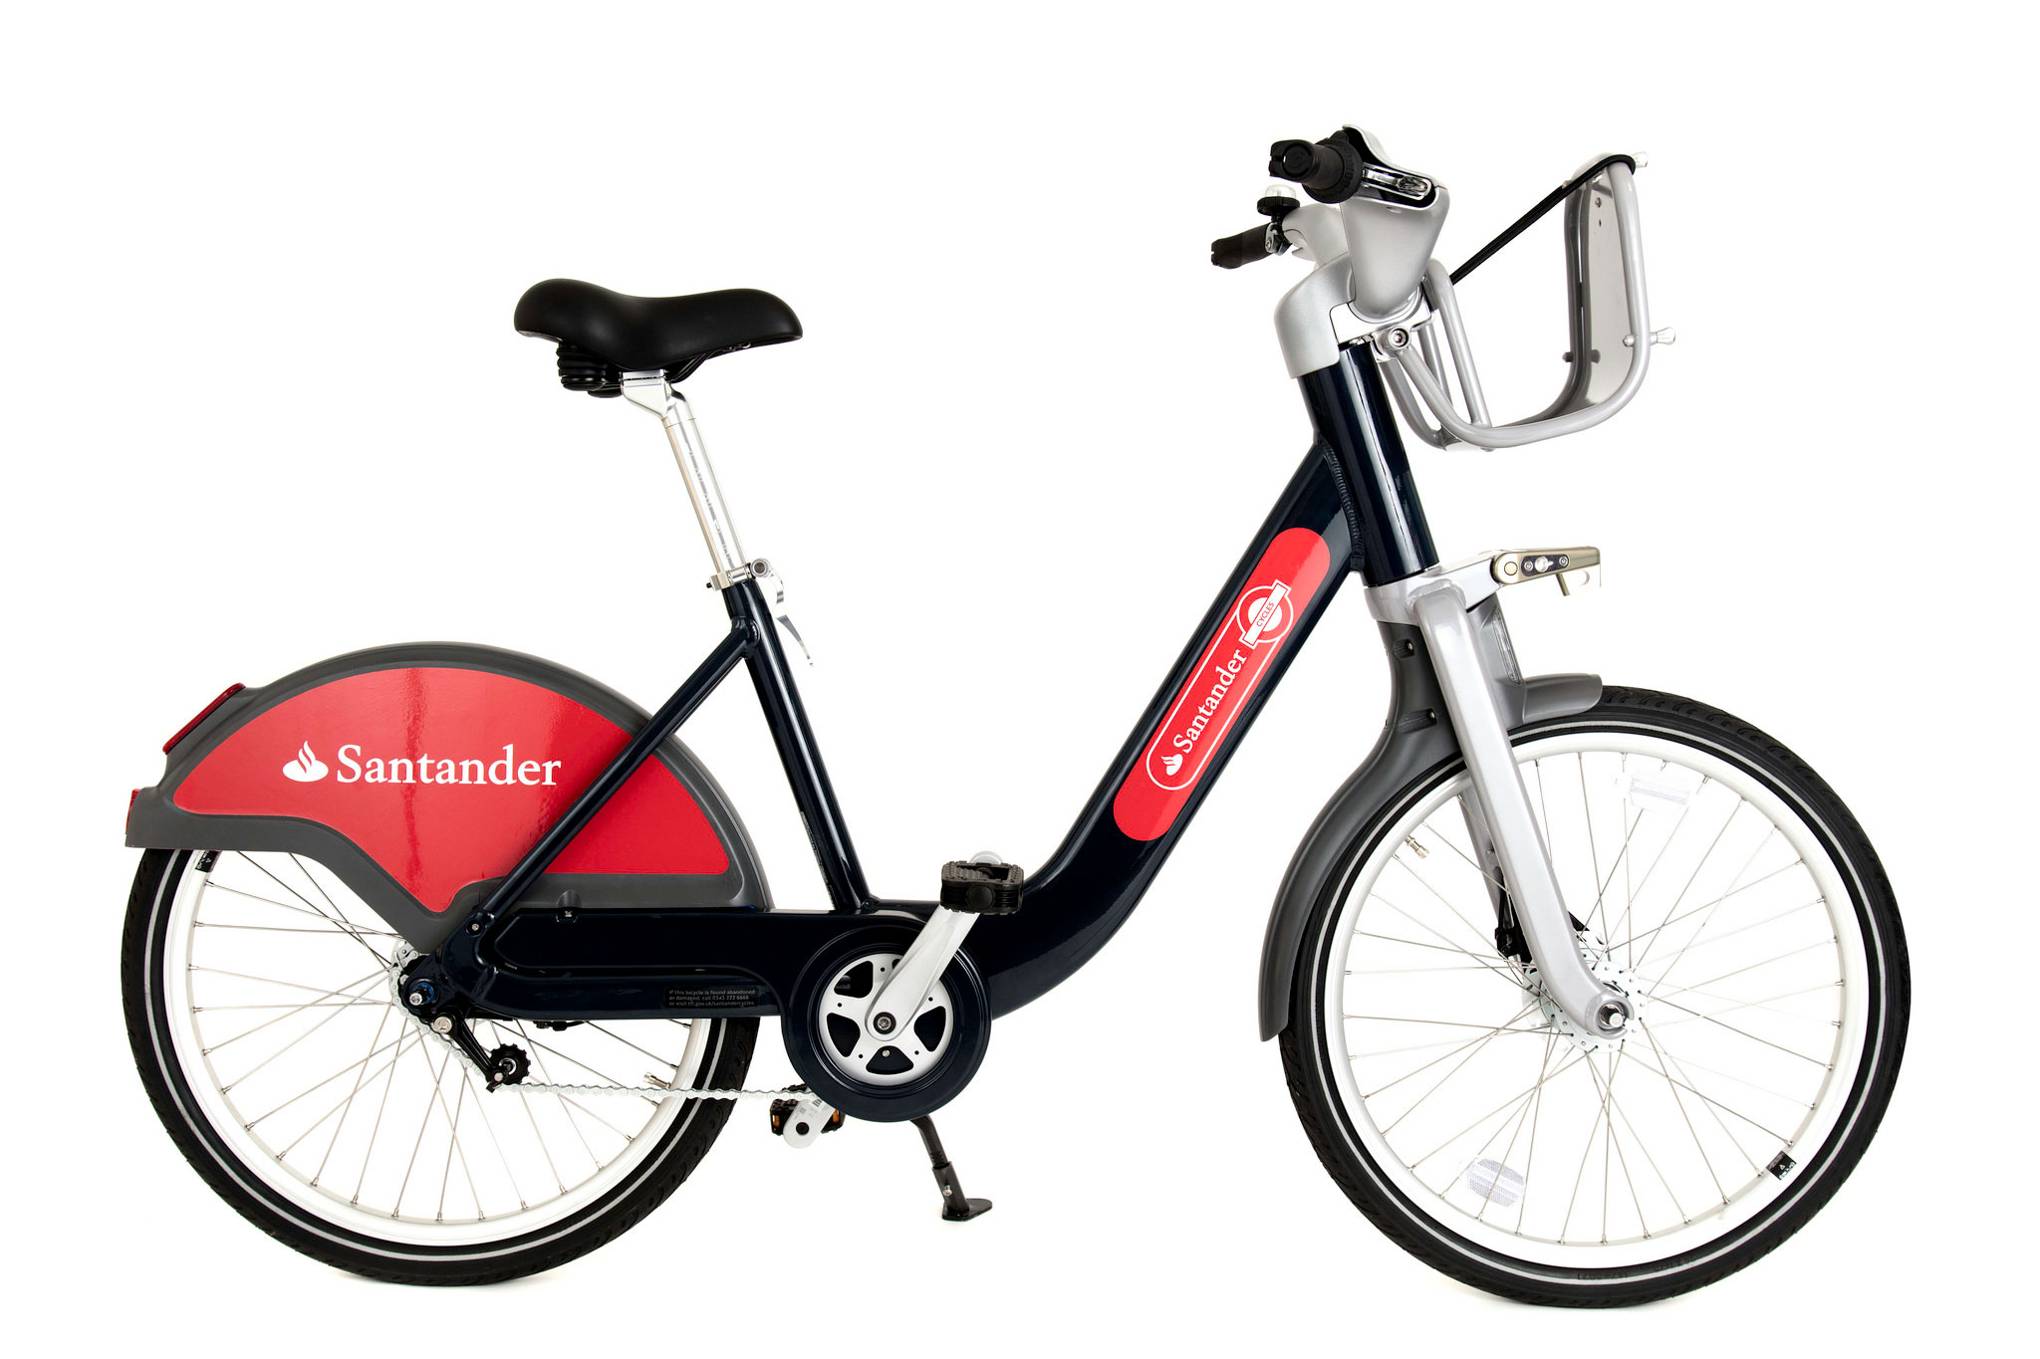 Santander hire bike scheme